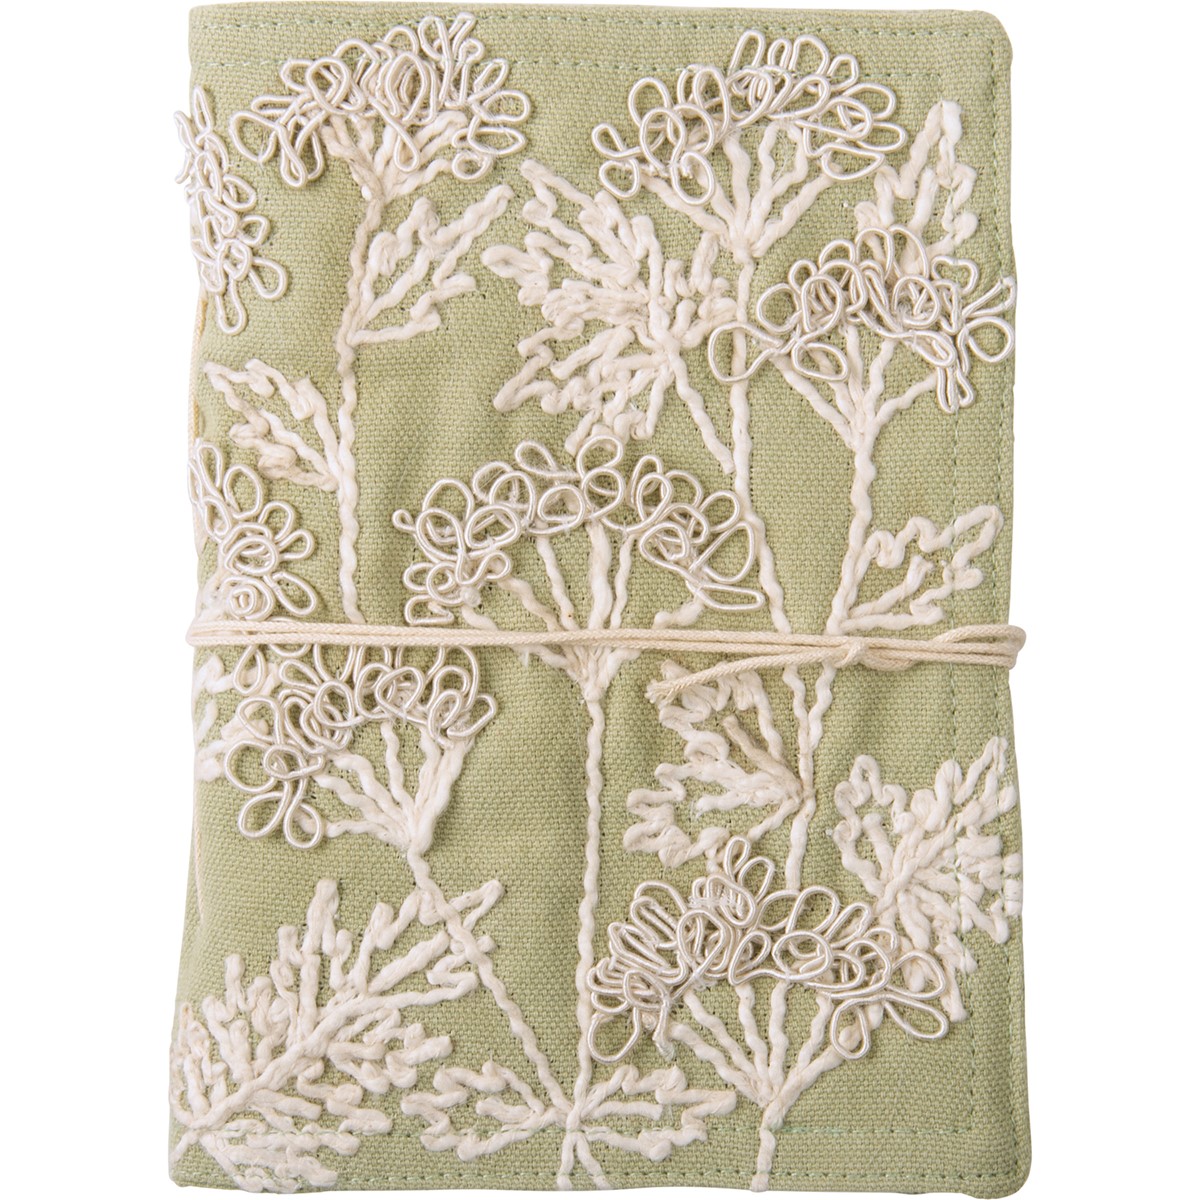 Queen Anne's Lace Journal - Cotton, Paper